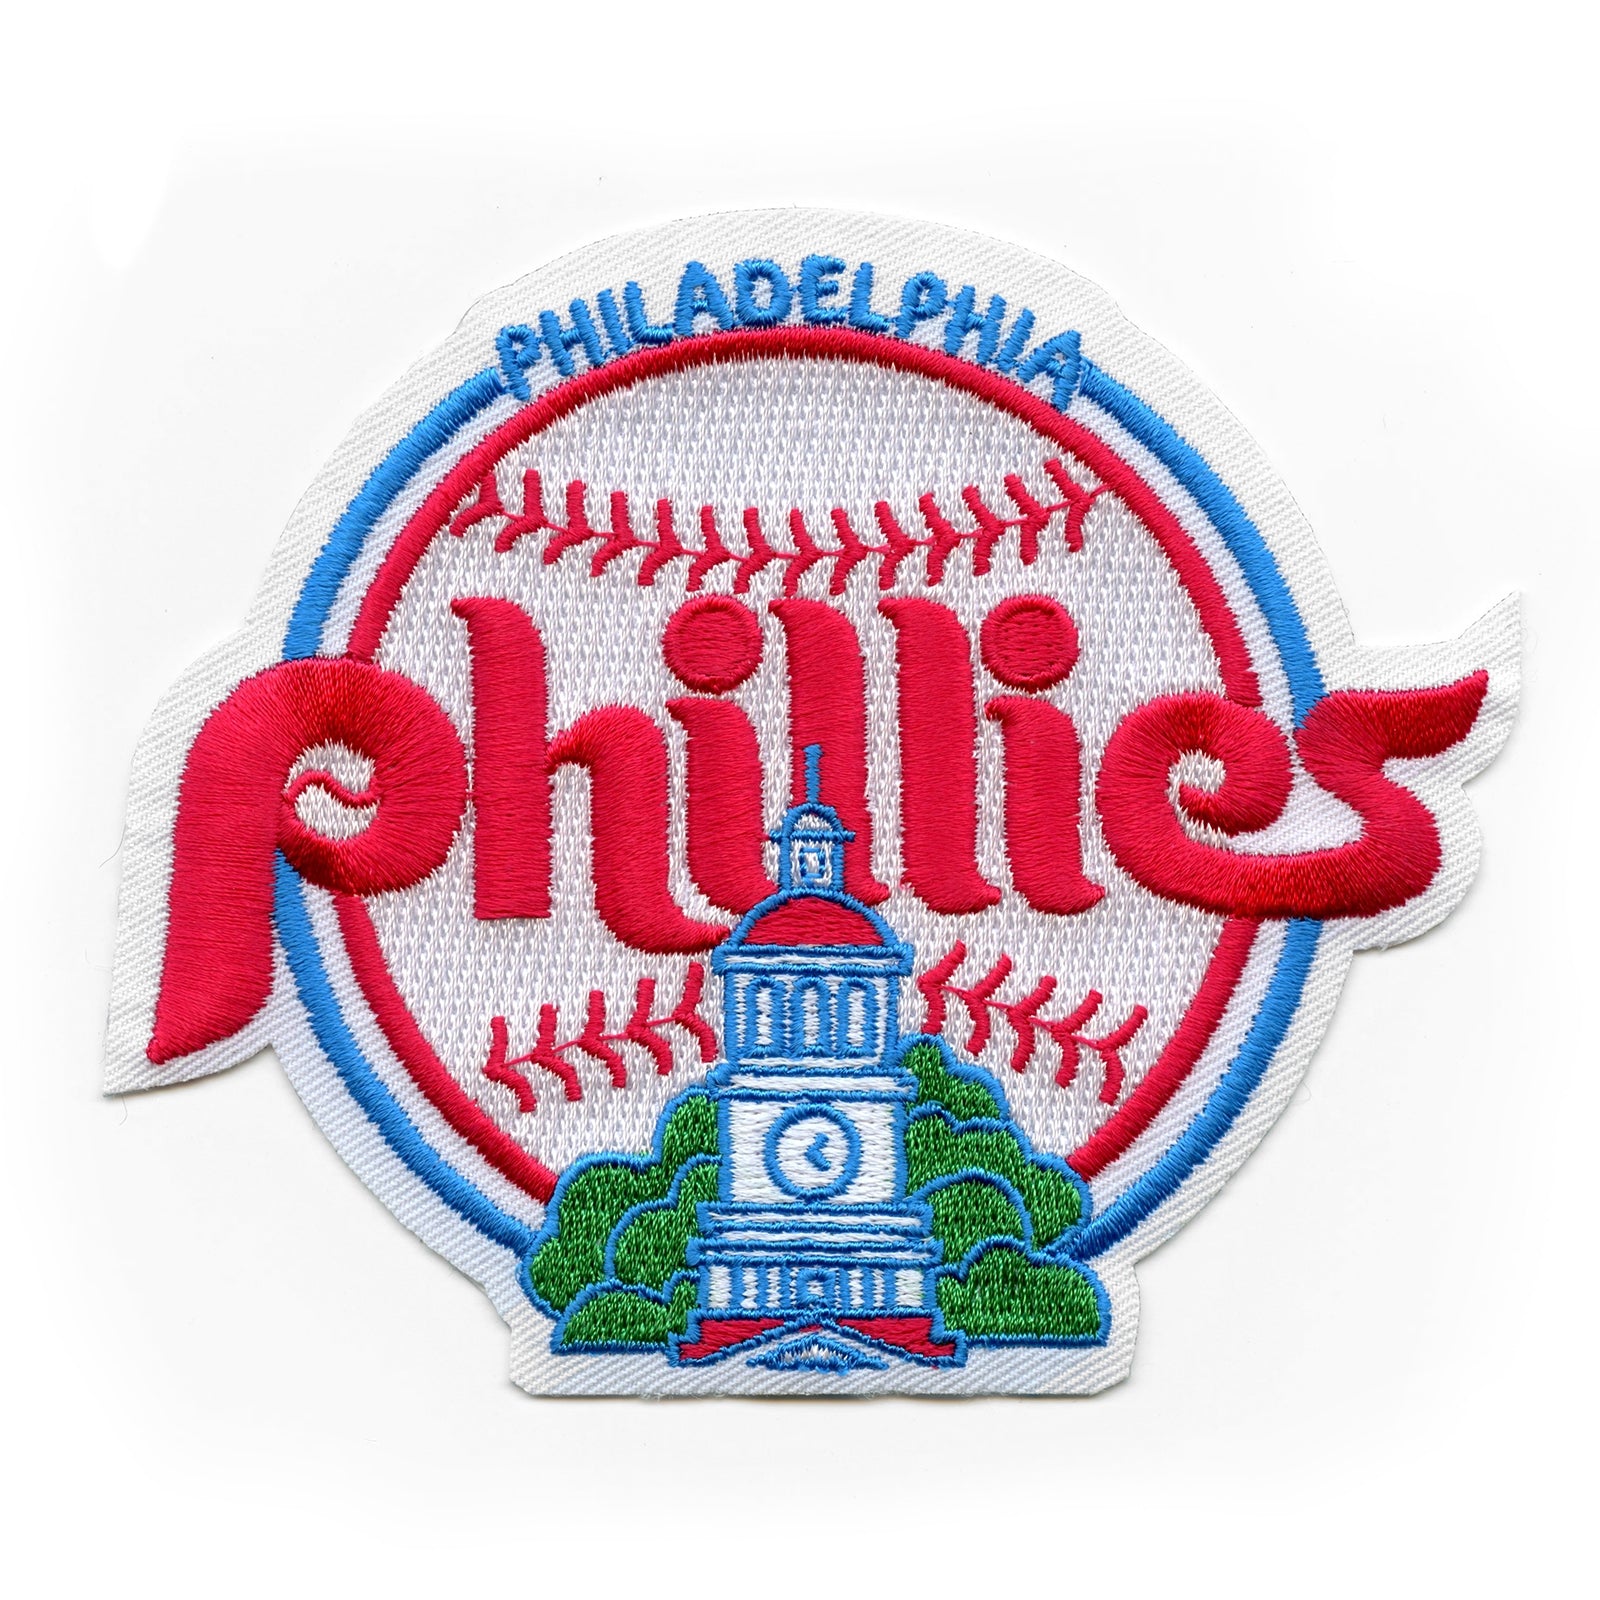 Philadelphia Phillies Vintage in Philadelphia Phillies Team Shop 